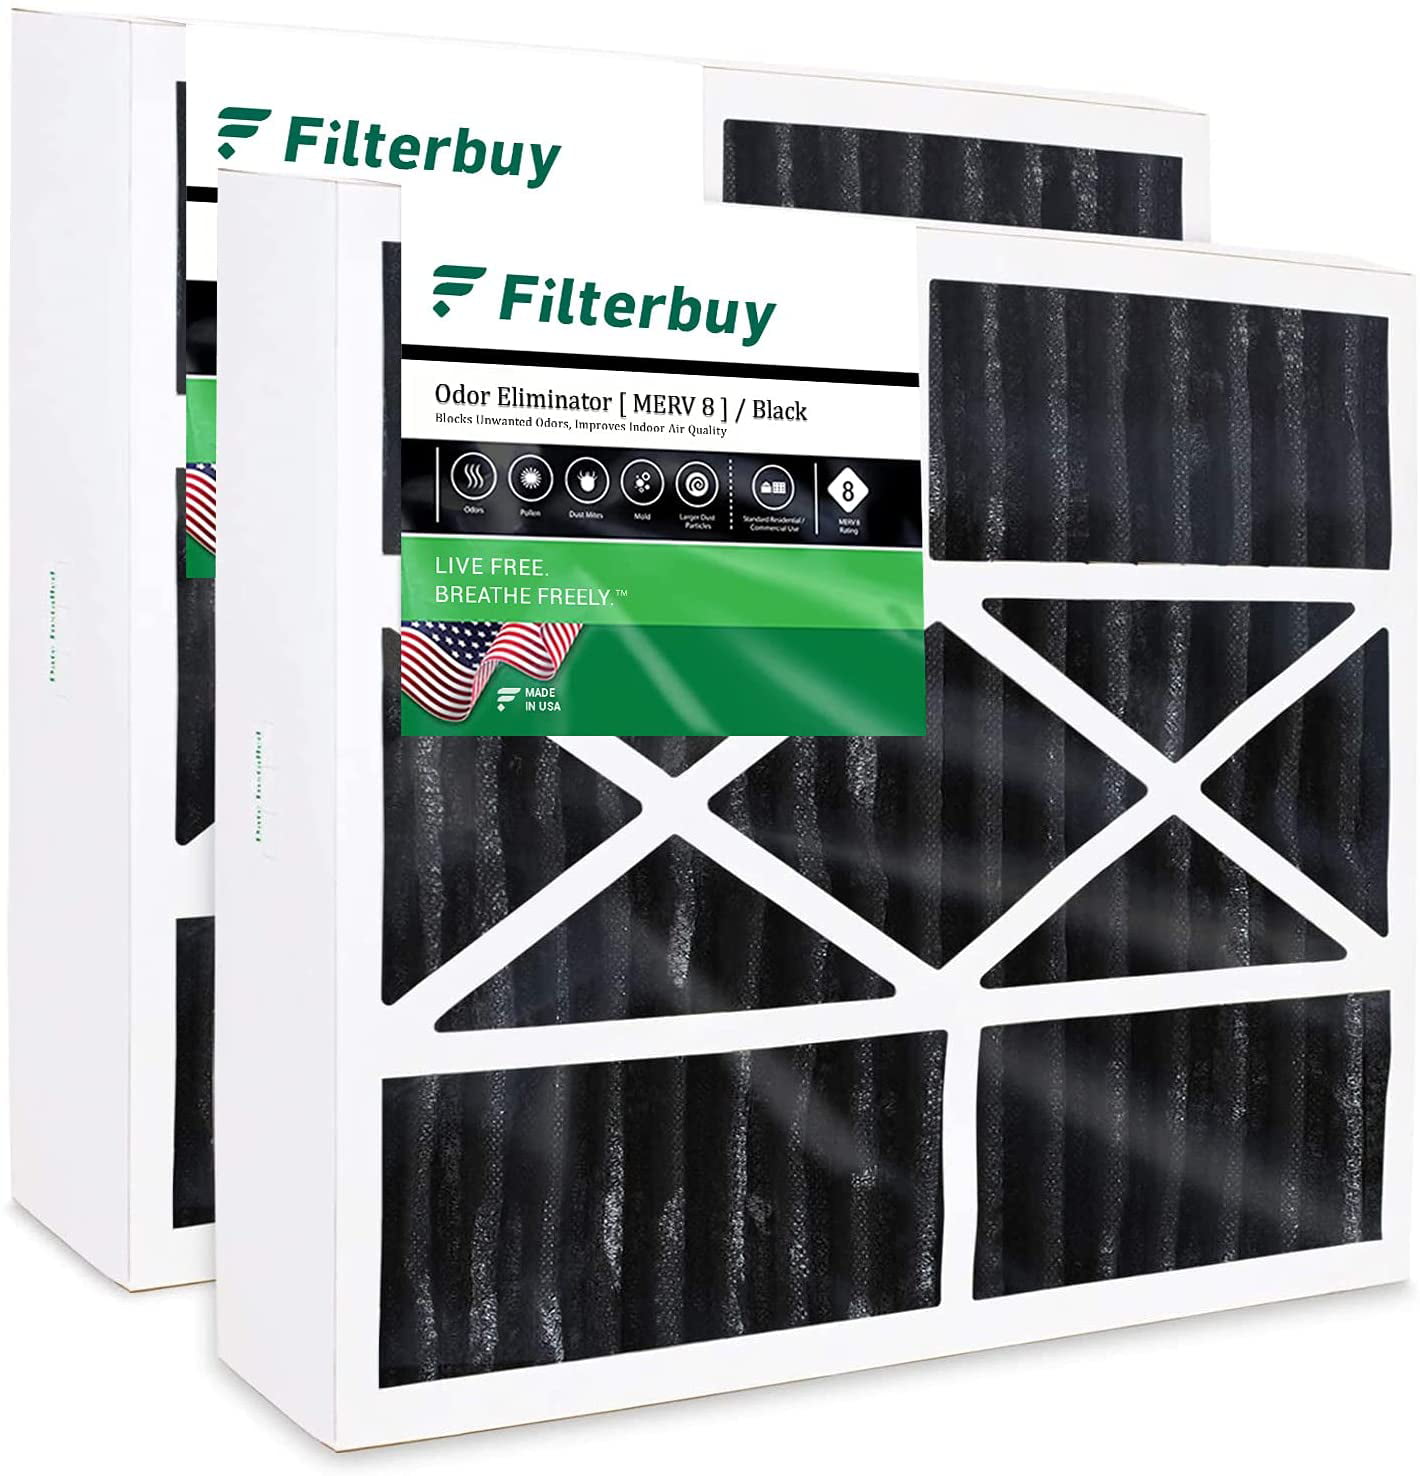 FilterBuy Allergen Odor Eliminator 14x14x1 MERV 8 Pleated AC Furnace Air Filter 